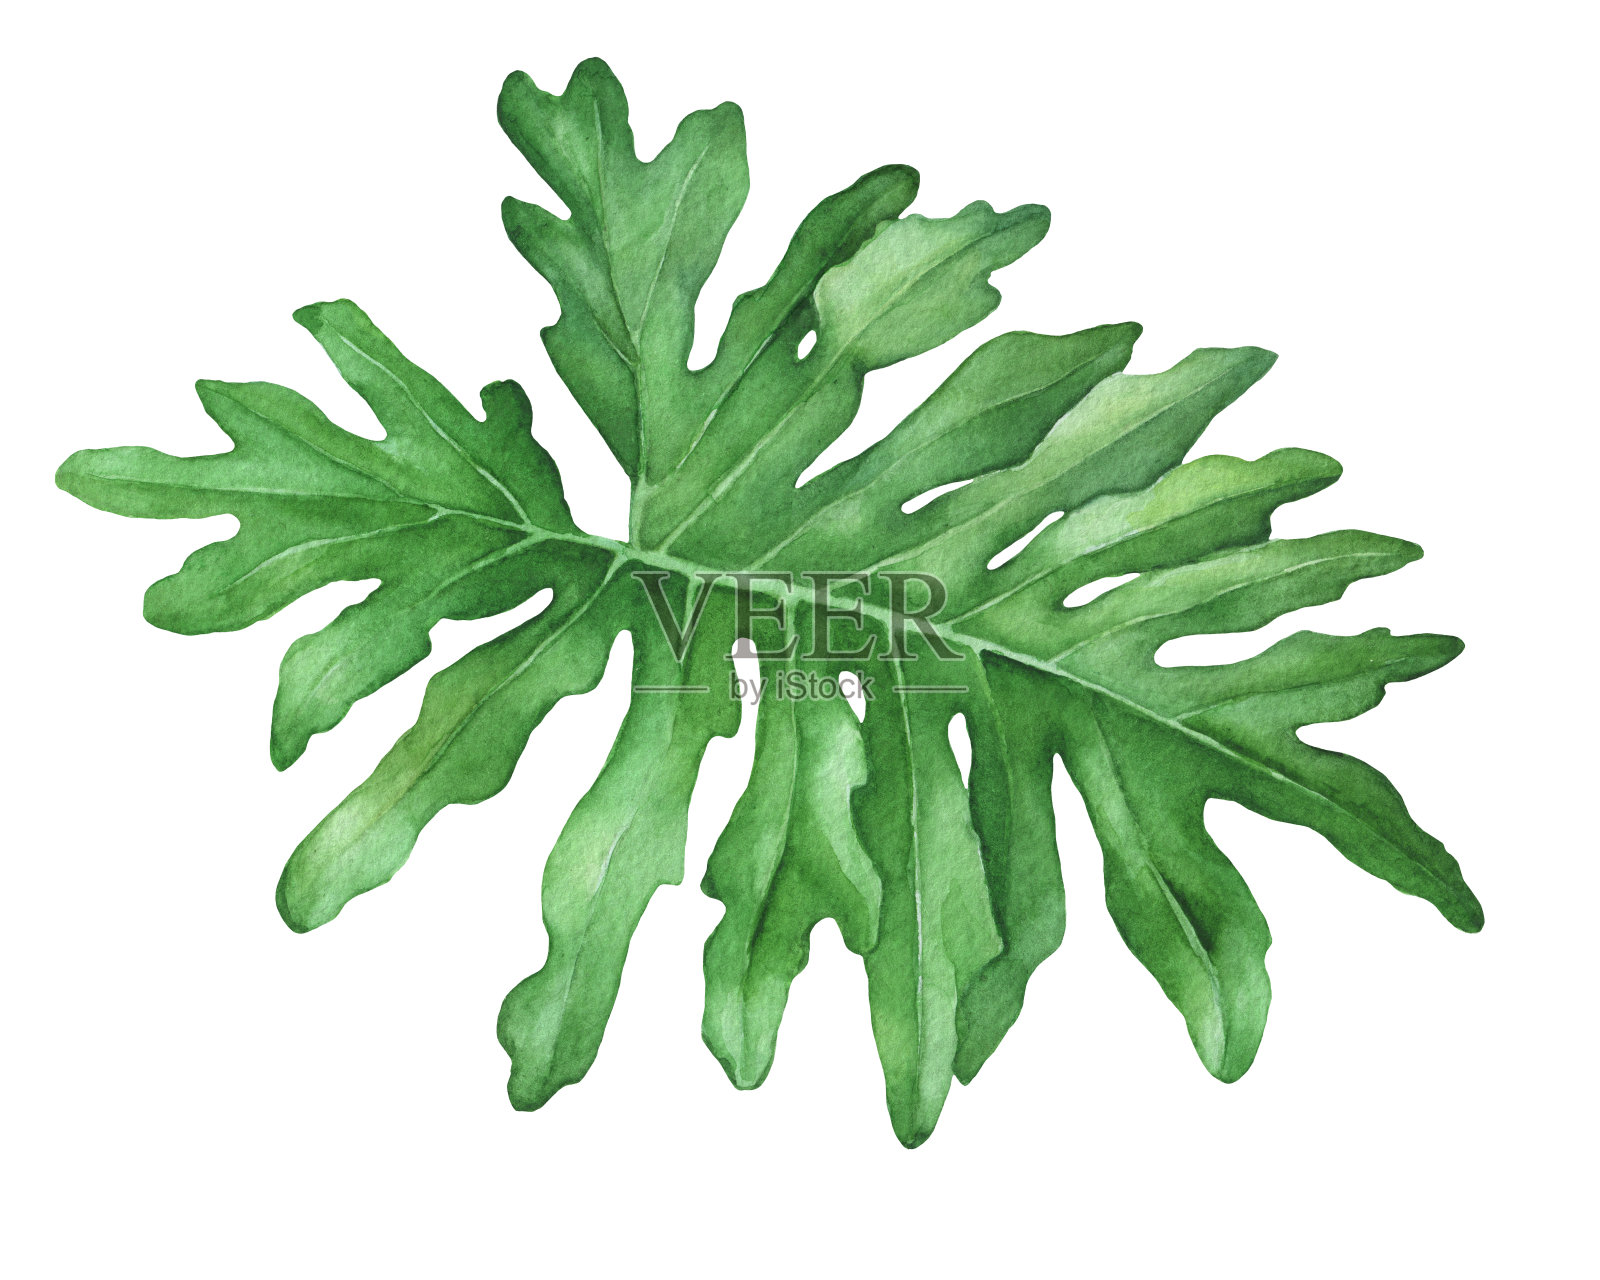 philodendron的绿色热带丛林叶子(也称为philodendron bipinnatifidum, Selloum, horsehead)。手绘水彩画插图孤立的白色背景。设计元素图片